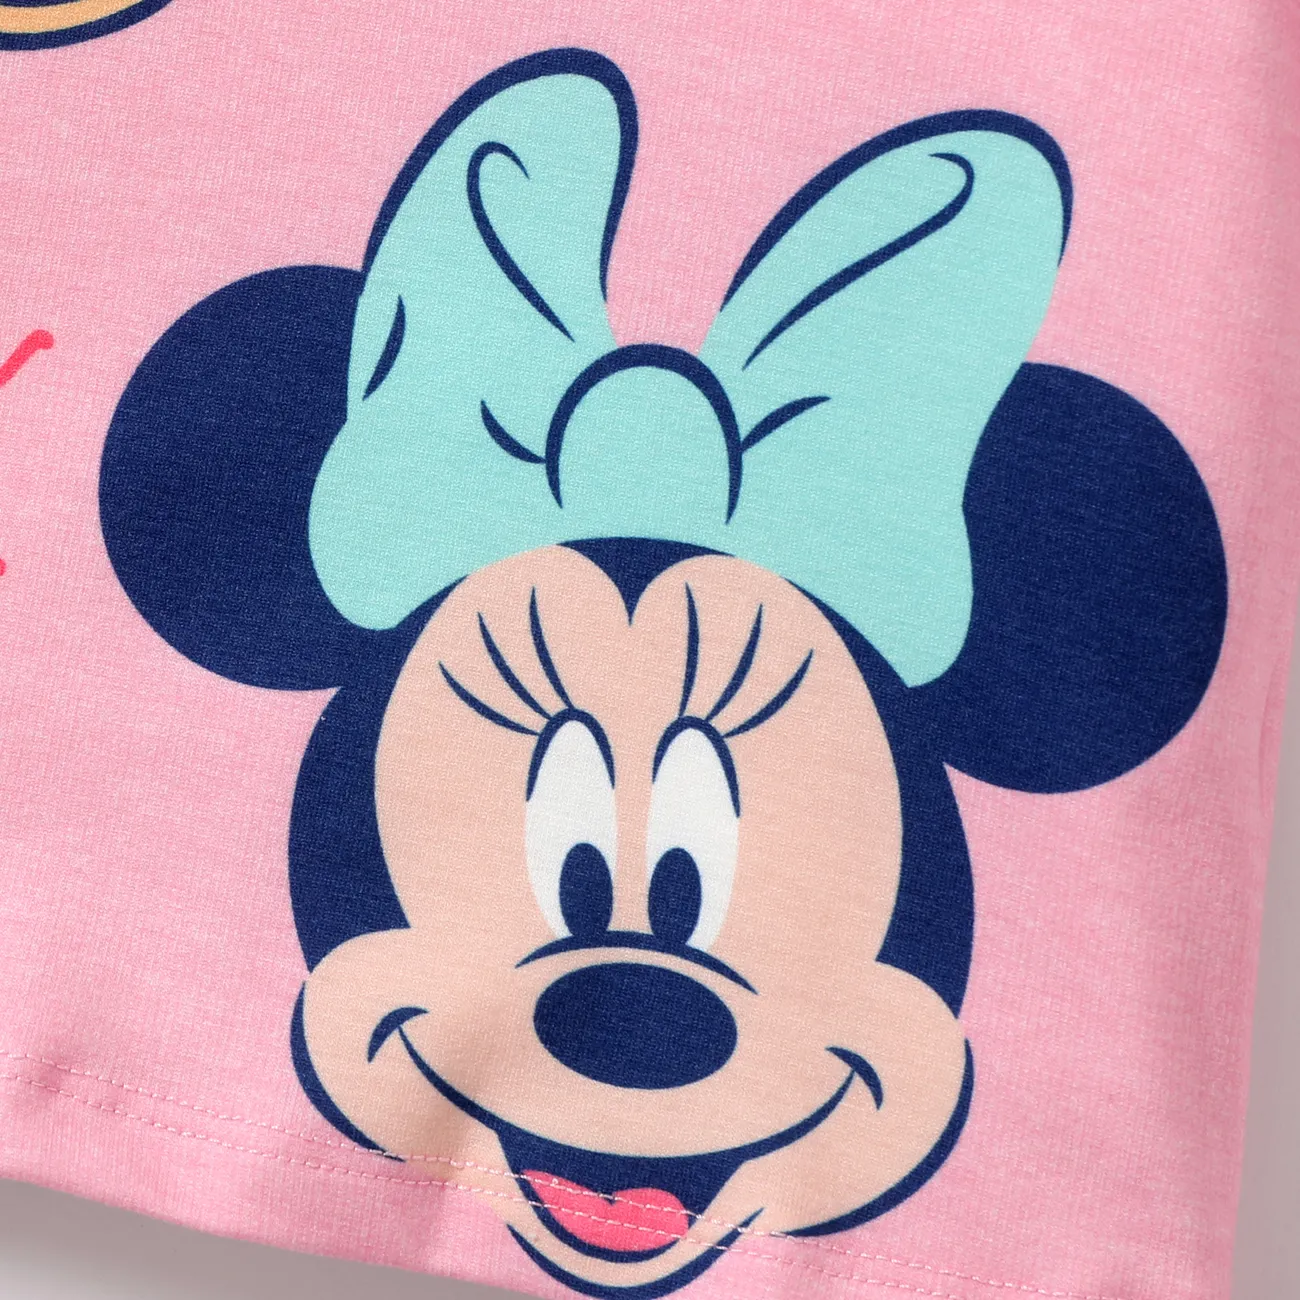 Disney Mickey and Friends Páscoa Criança Menina Infantil Manga curta T-shirts Rosa big image 1